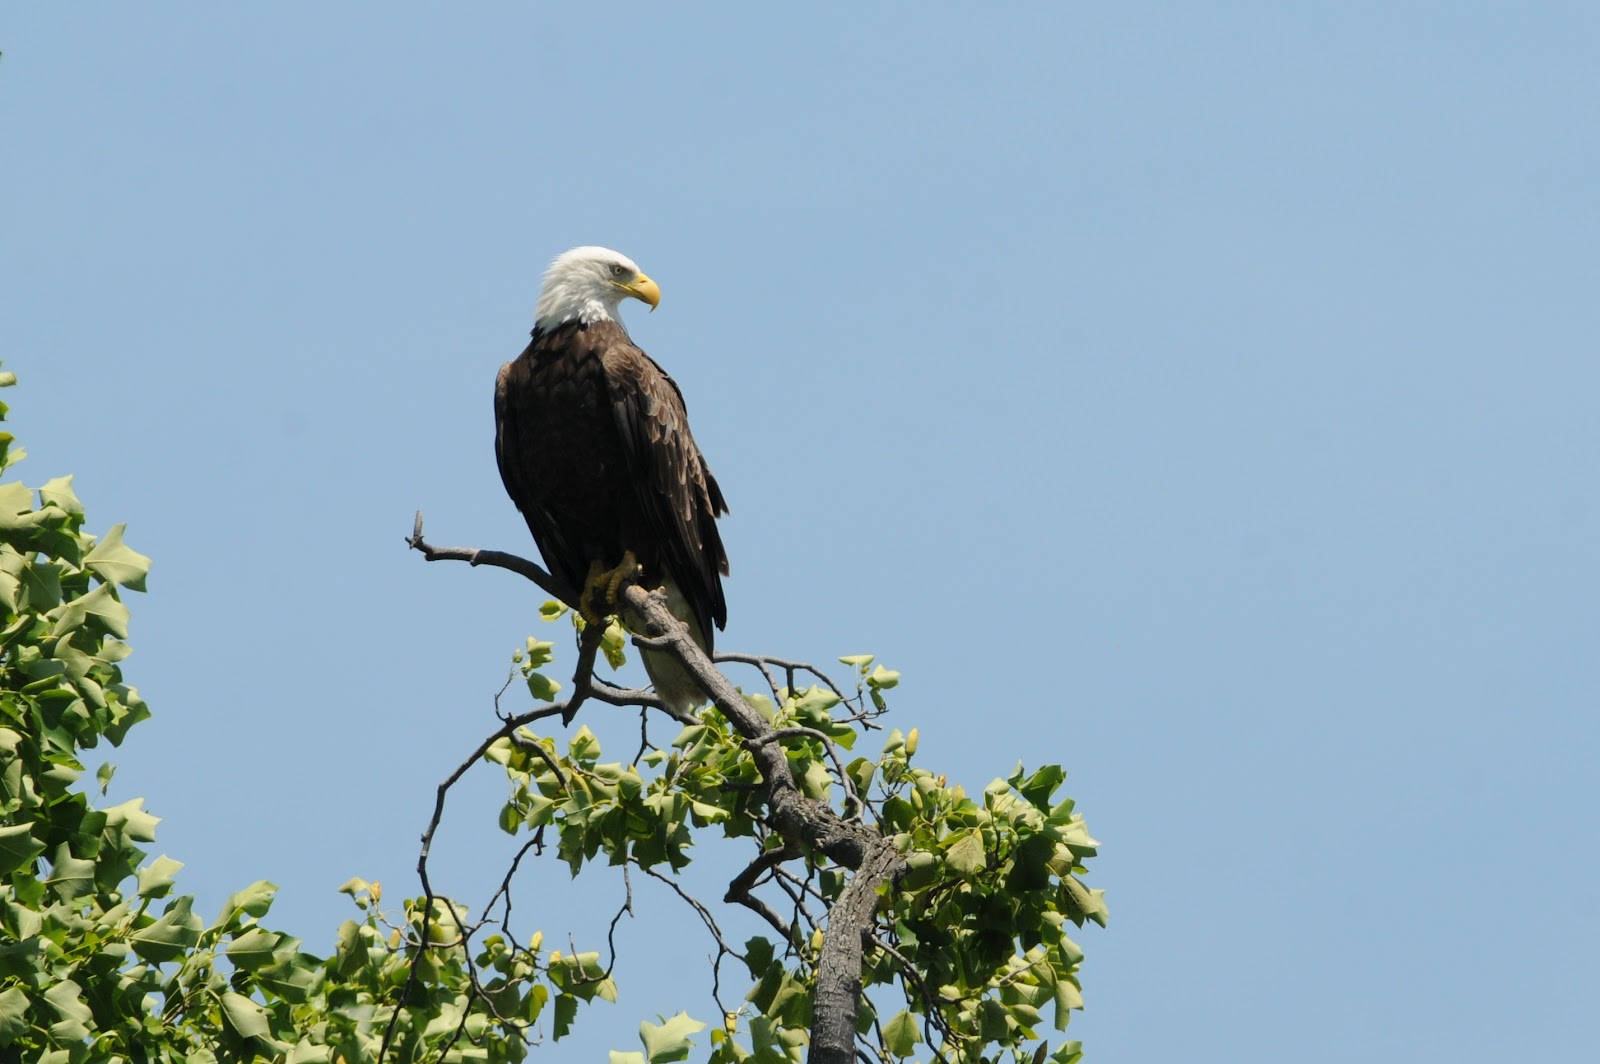 Wildlife photography: Update to Fort Hunt Bald Eagles Nest season